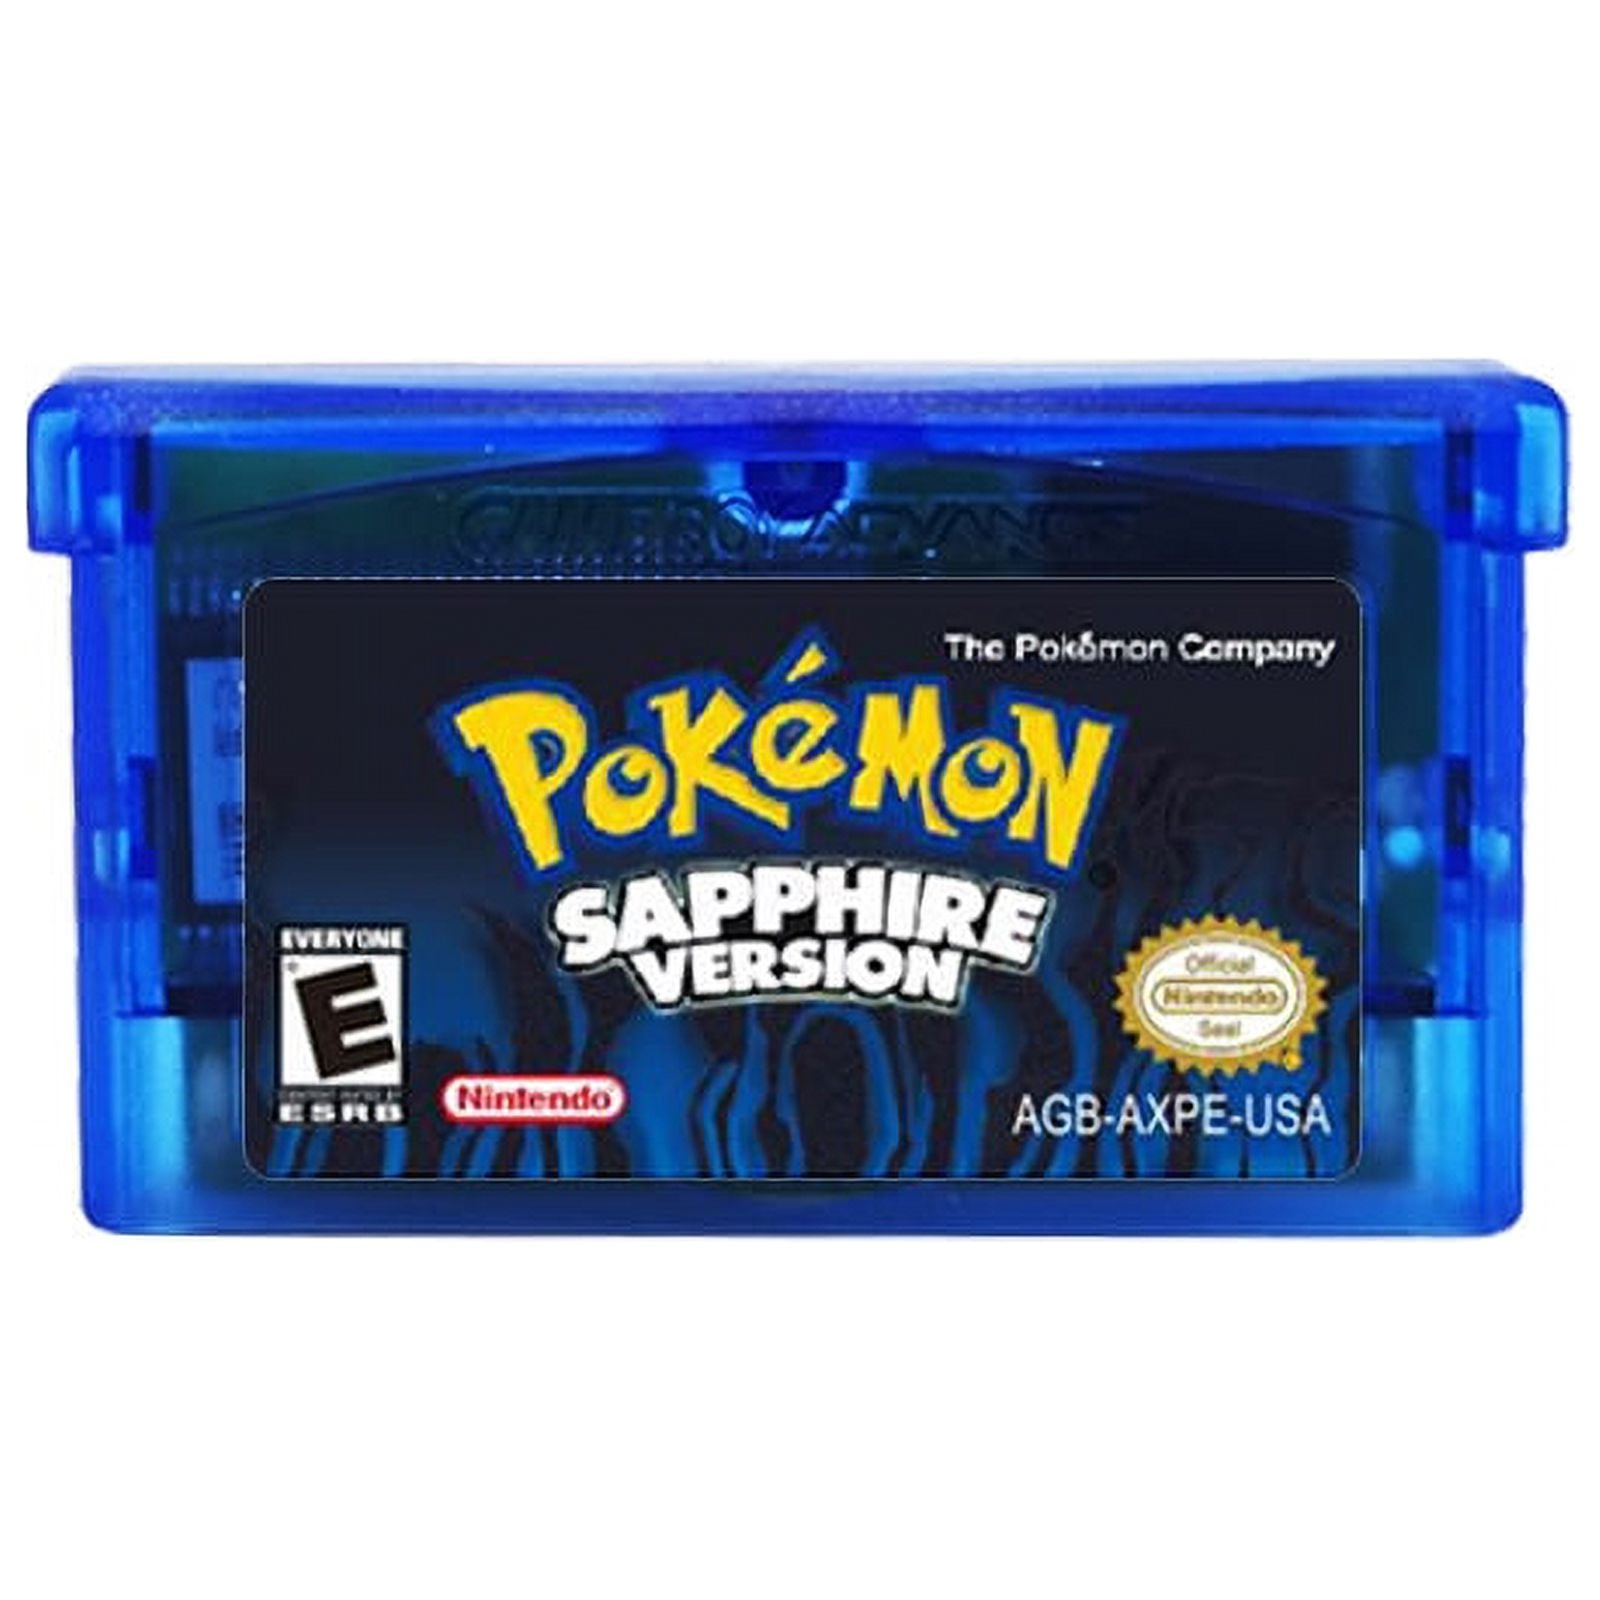 Pokemon Emerald Version Nintendo Game Boy Advance - Gandorion Games